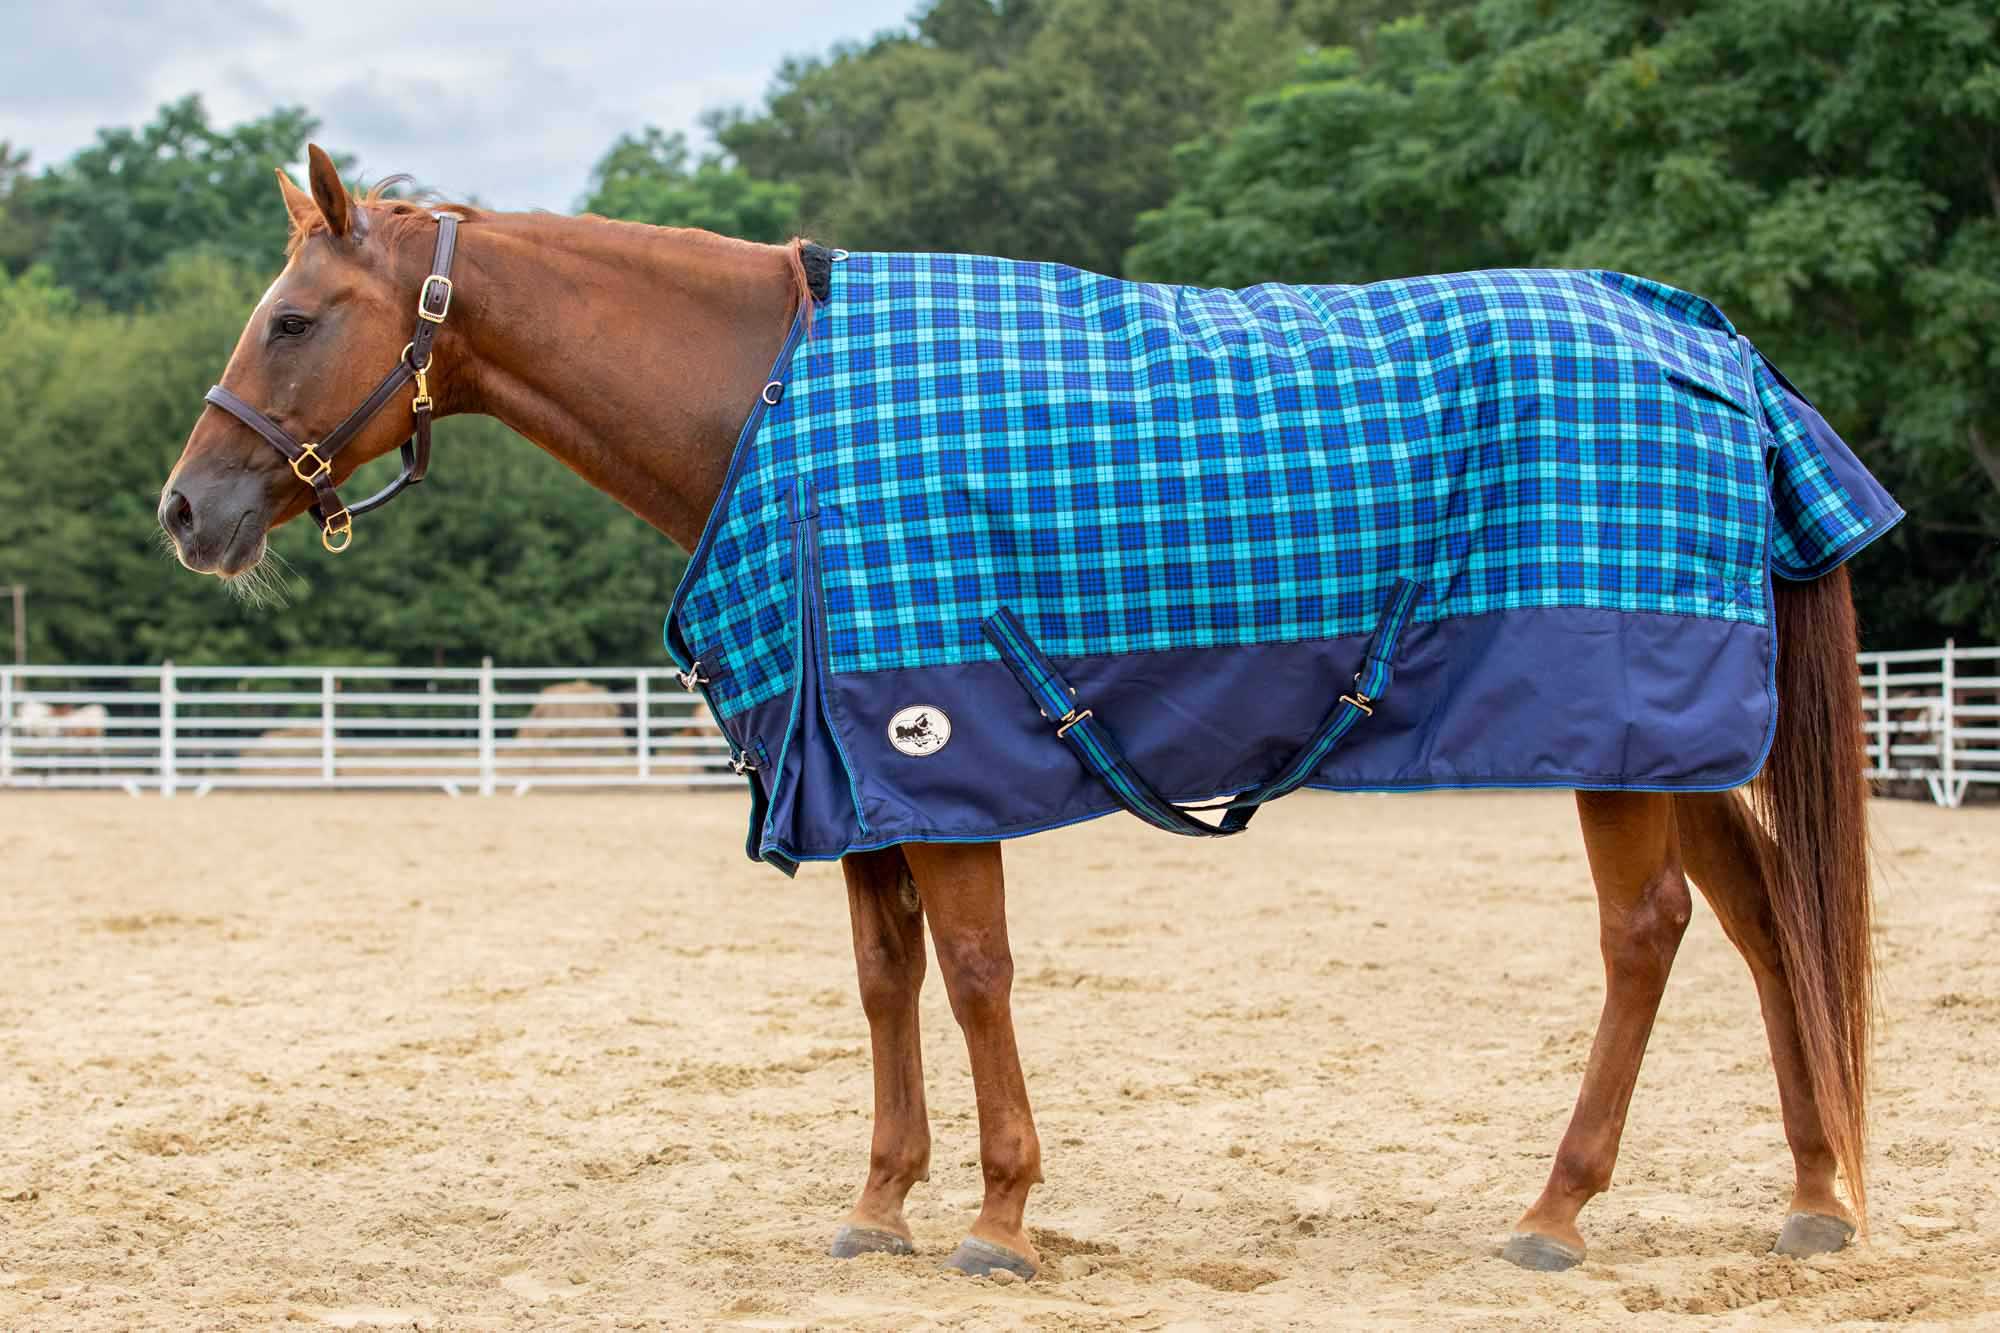 Jeffers Economy 600D Royal Blue/Teal Plaid Horse Blanket, 240g